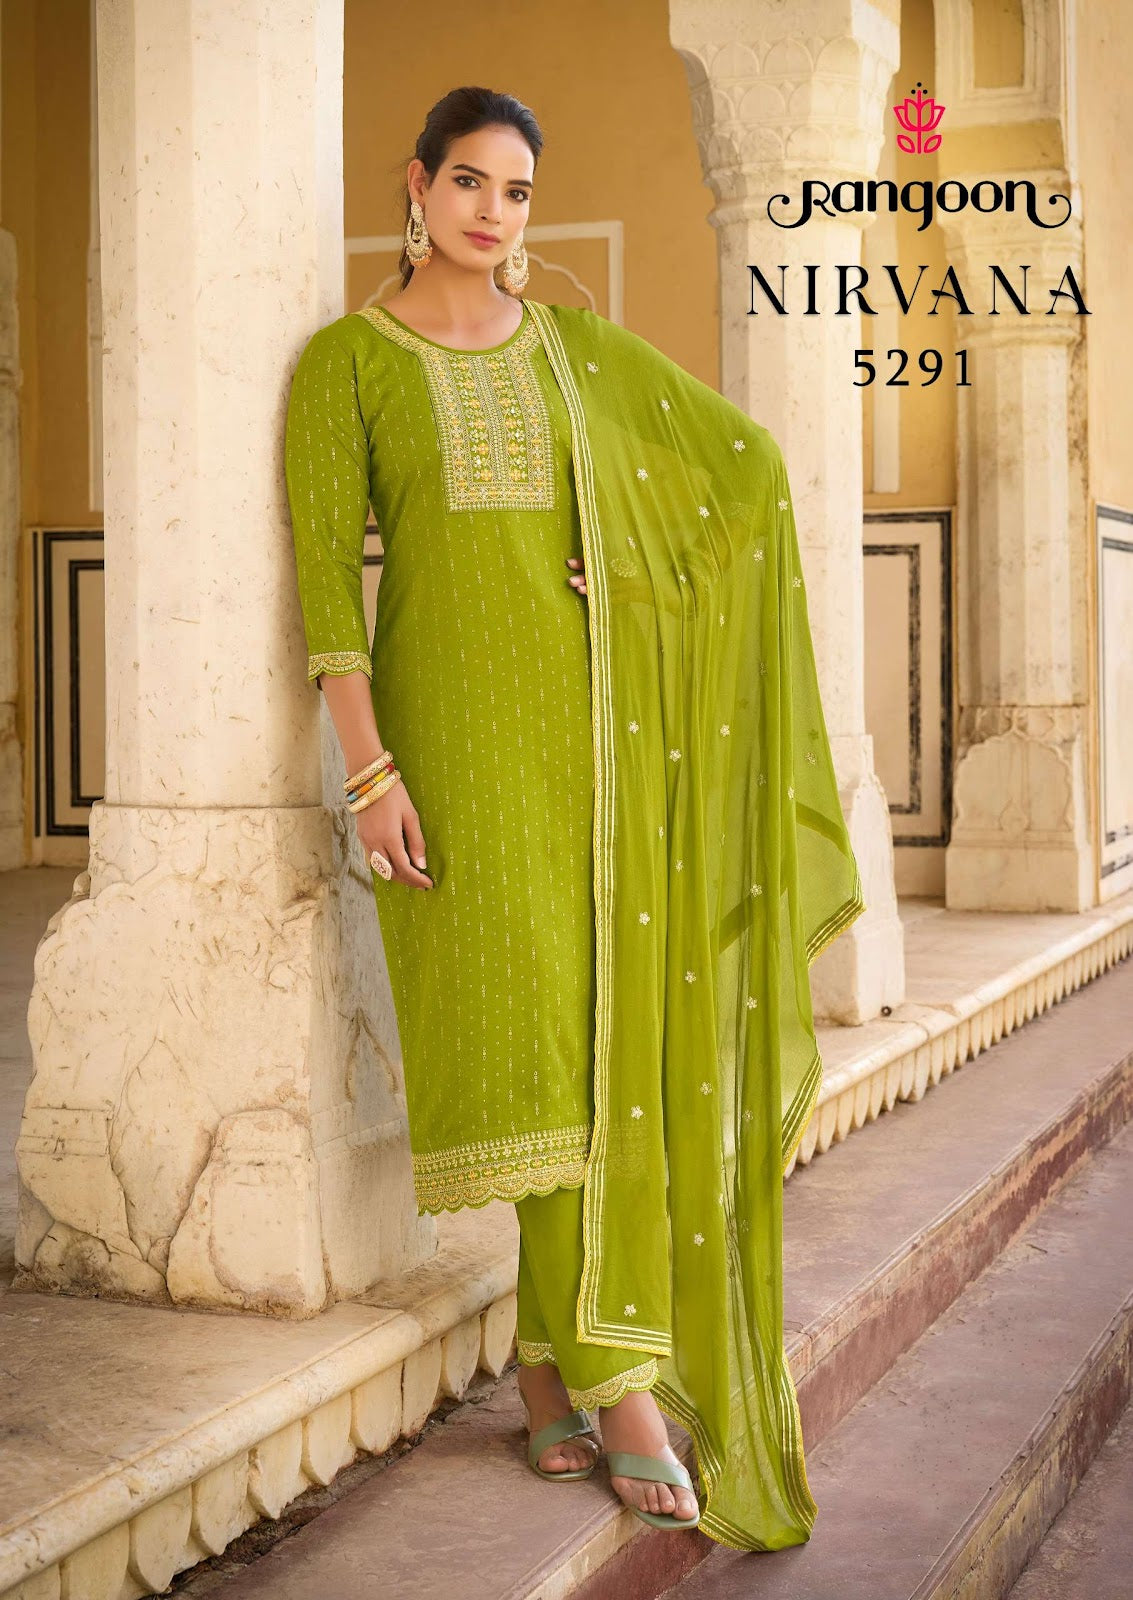 Nirvana Rangoon Rayon Readymade Pant Style Suits Supplier India